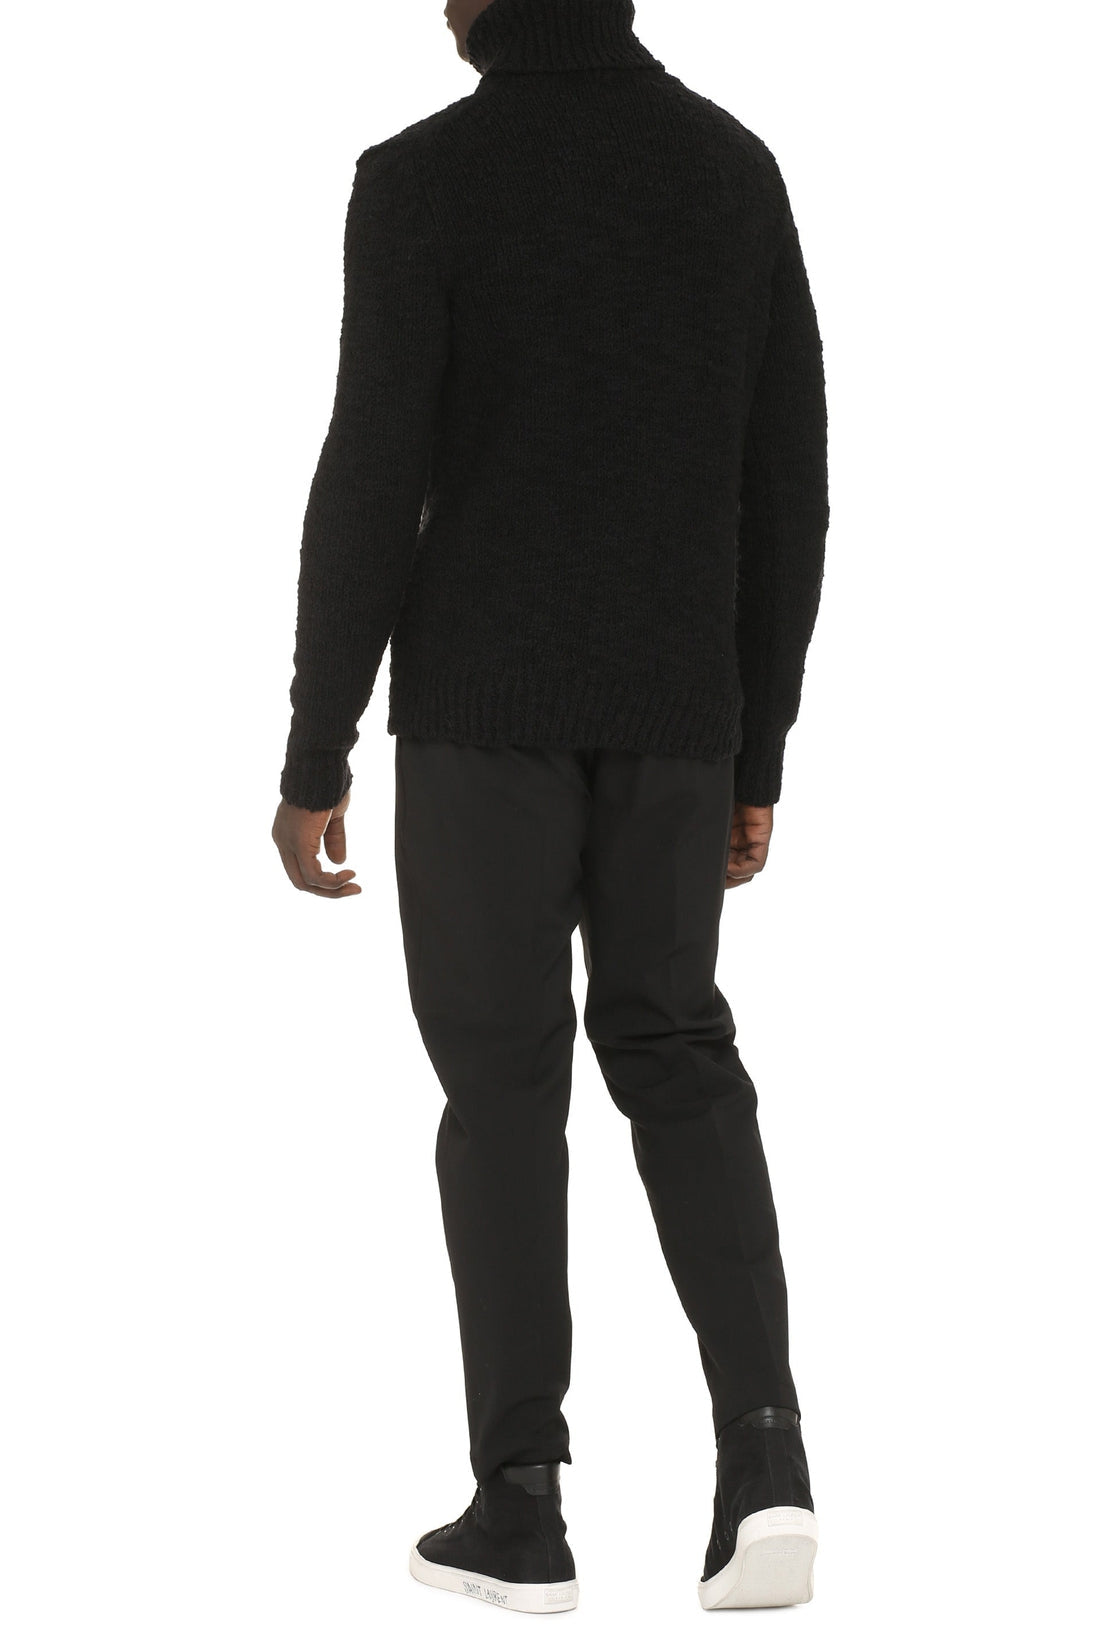 Dolce & Gabbana-OUTLET-SALE-Virgin wool turtleneck sweater-ARCHIVIST